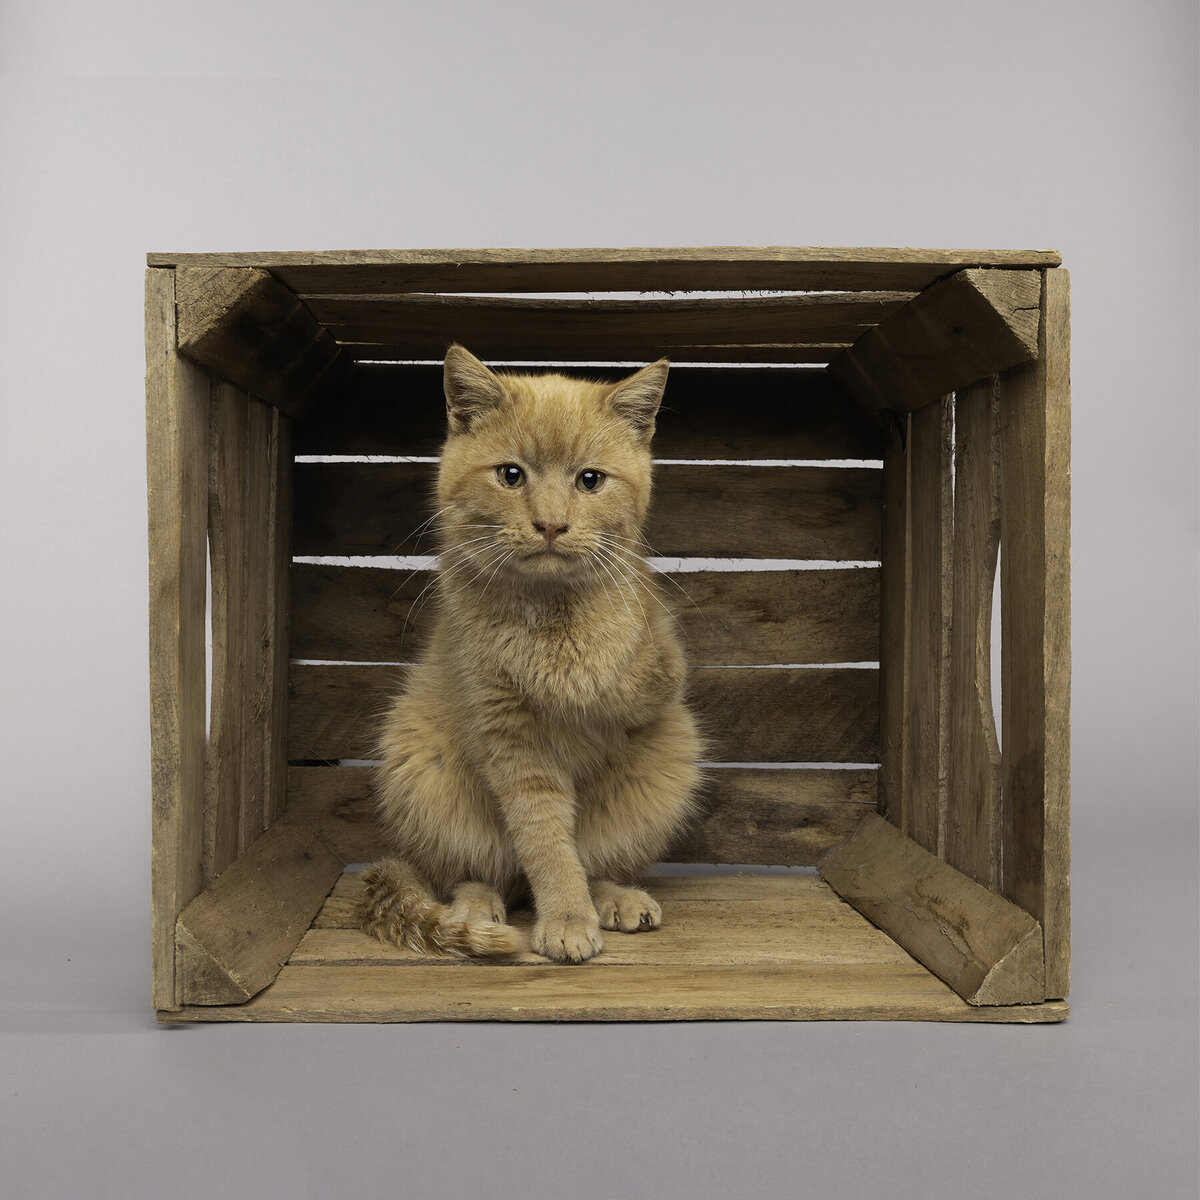 orange 3 legged cat in a wooden box